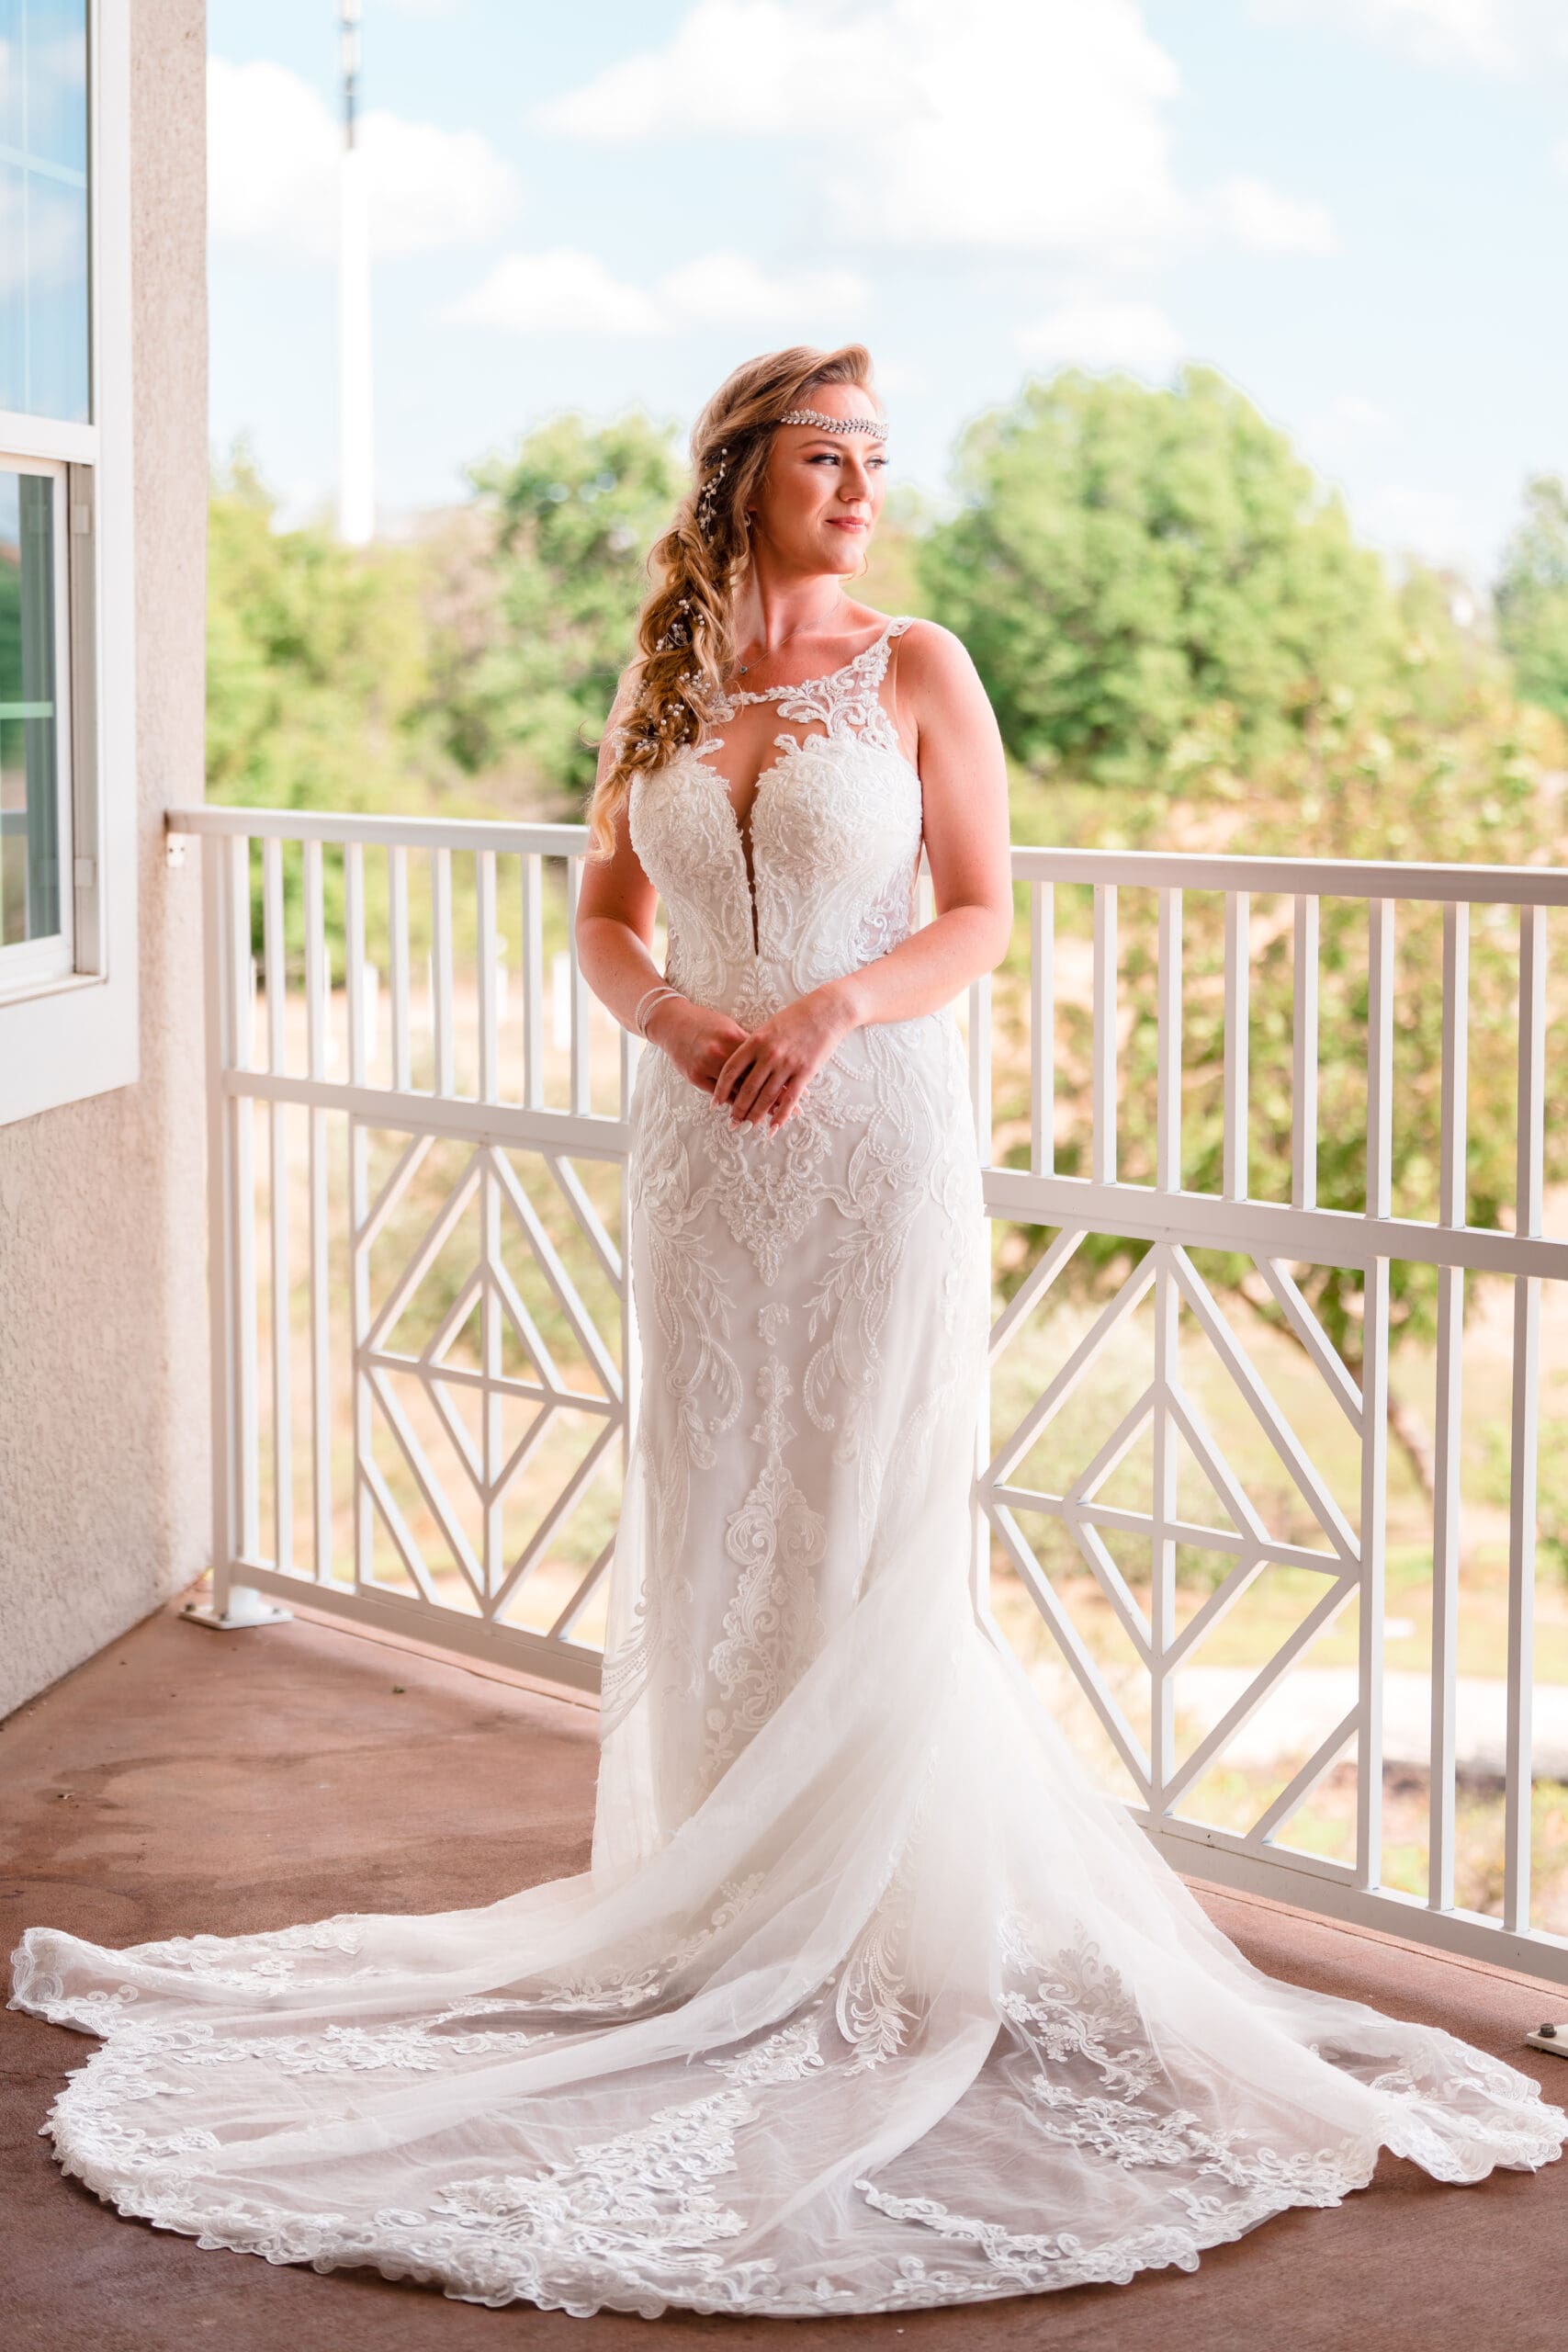 Kristen Standing on Balcony of Island Grove Recreation Center, Ready for Wedding